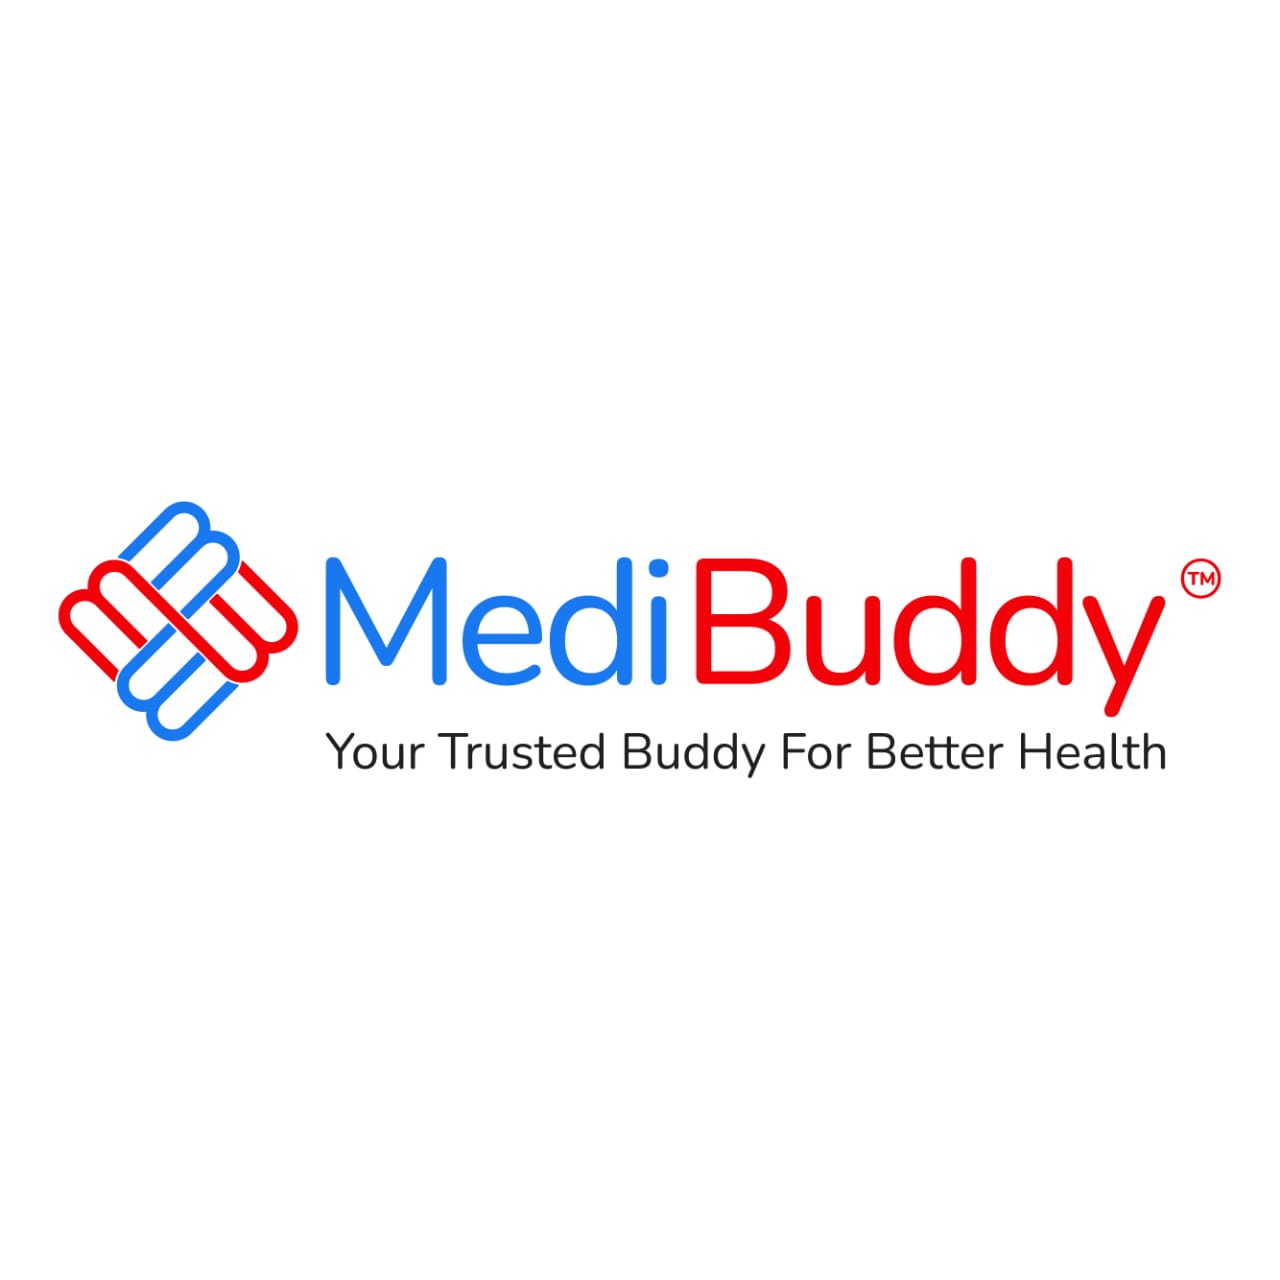 medibuddy logo